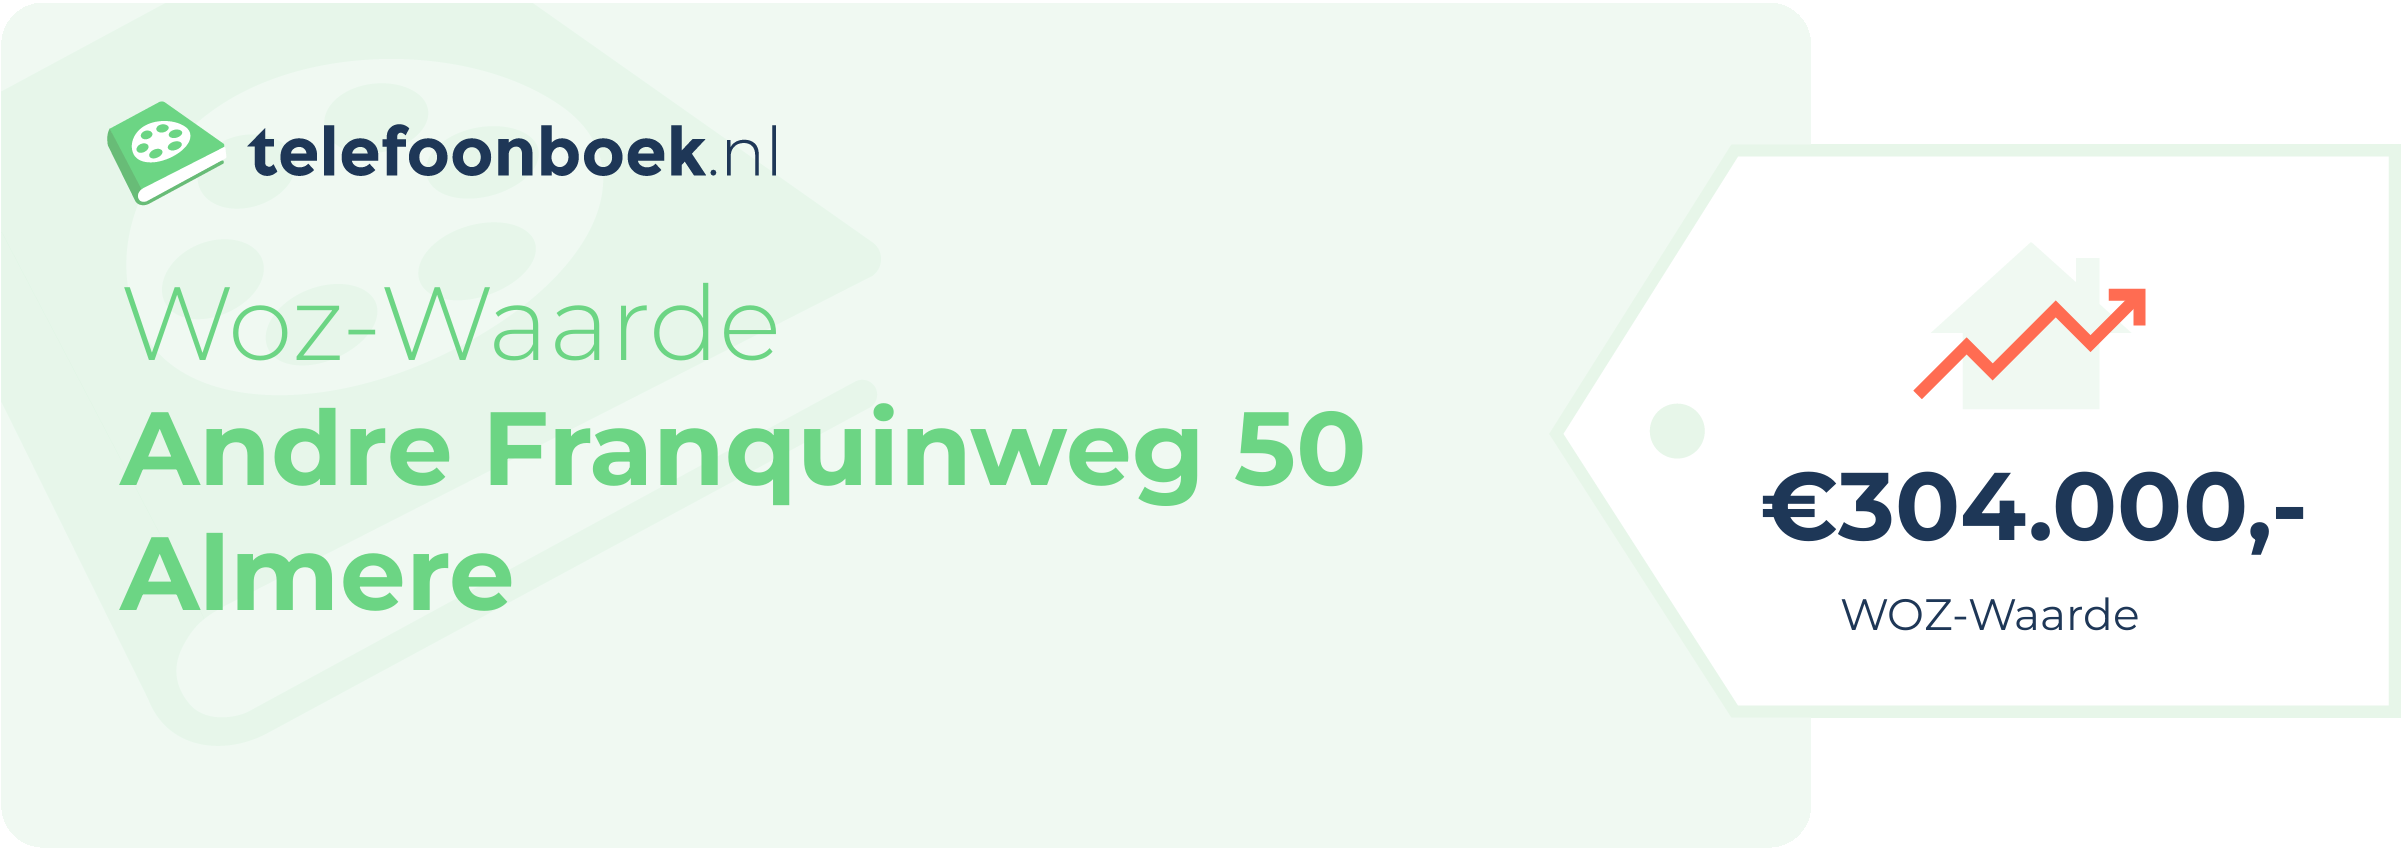 WOZ-waarde Andre Franquinweg 50 Almere